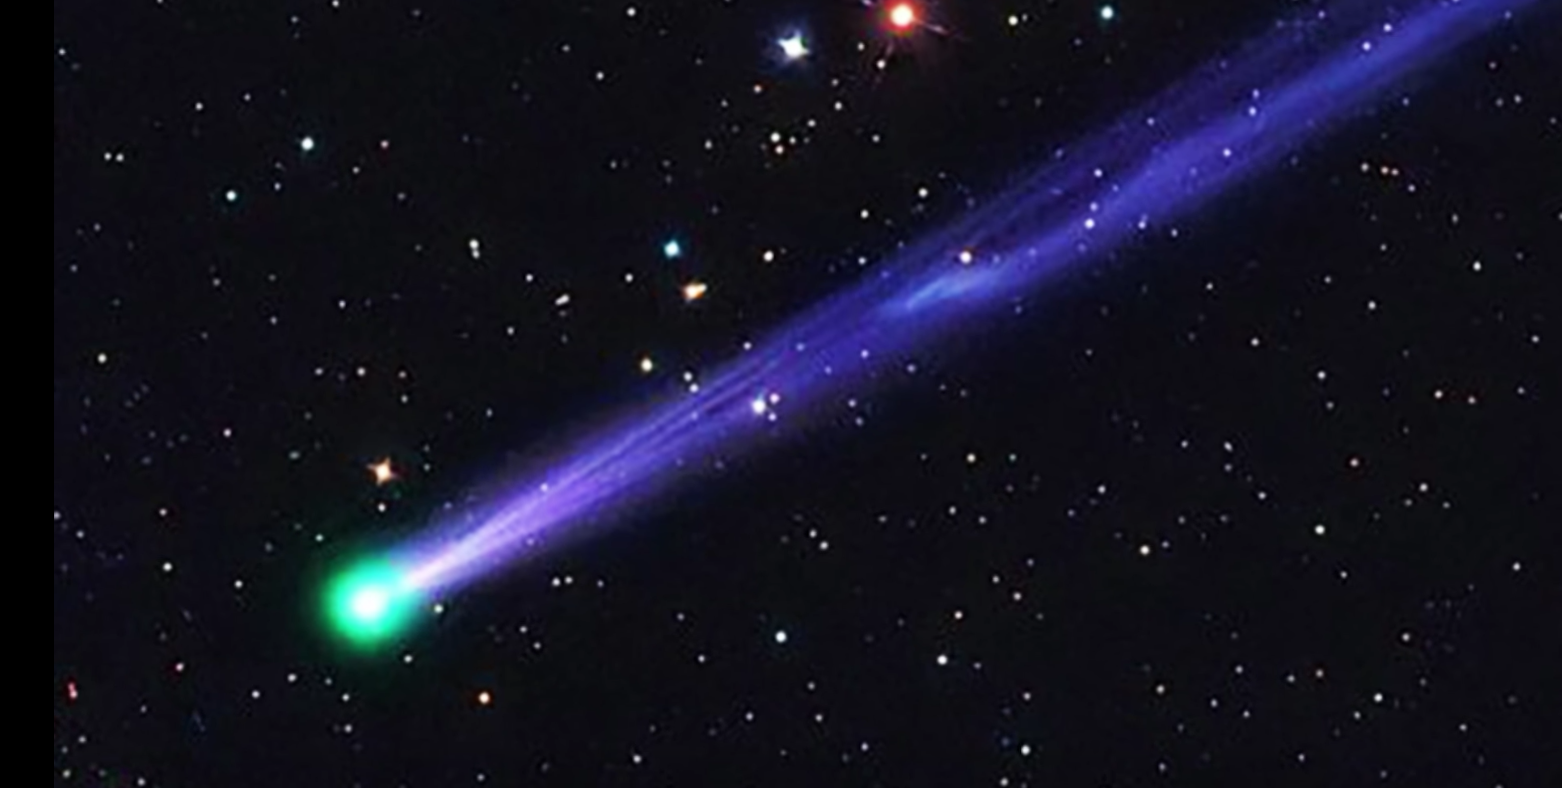 Comet 45p - eclipse, comet, full moon share Friday night's sky - CBS News